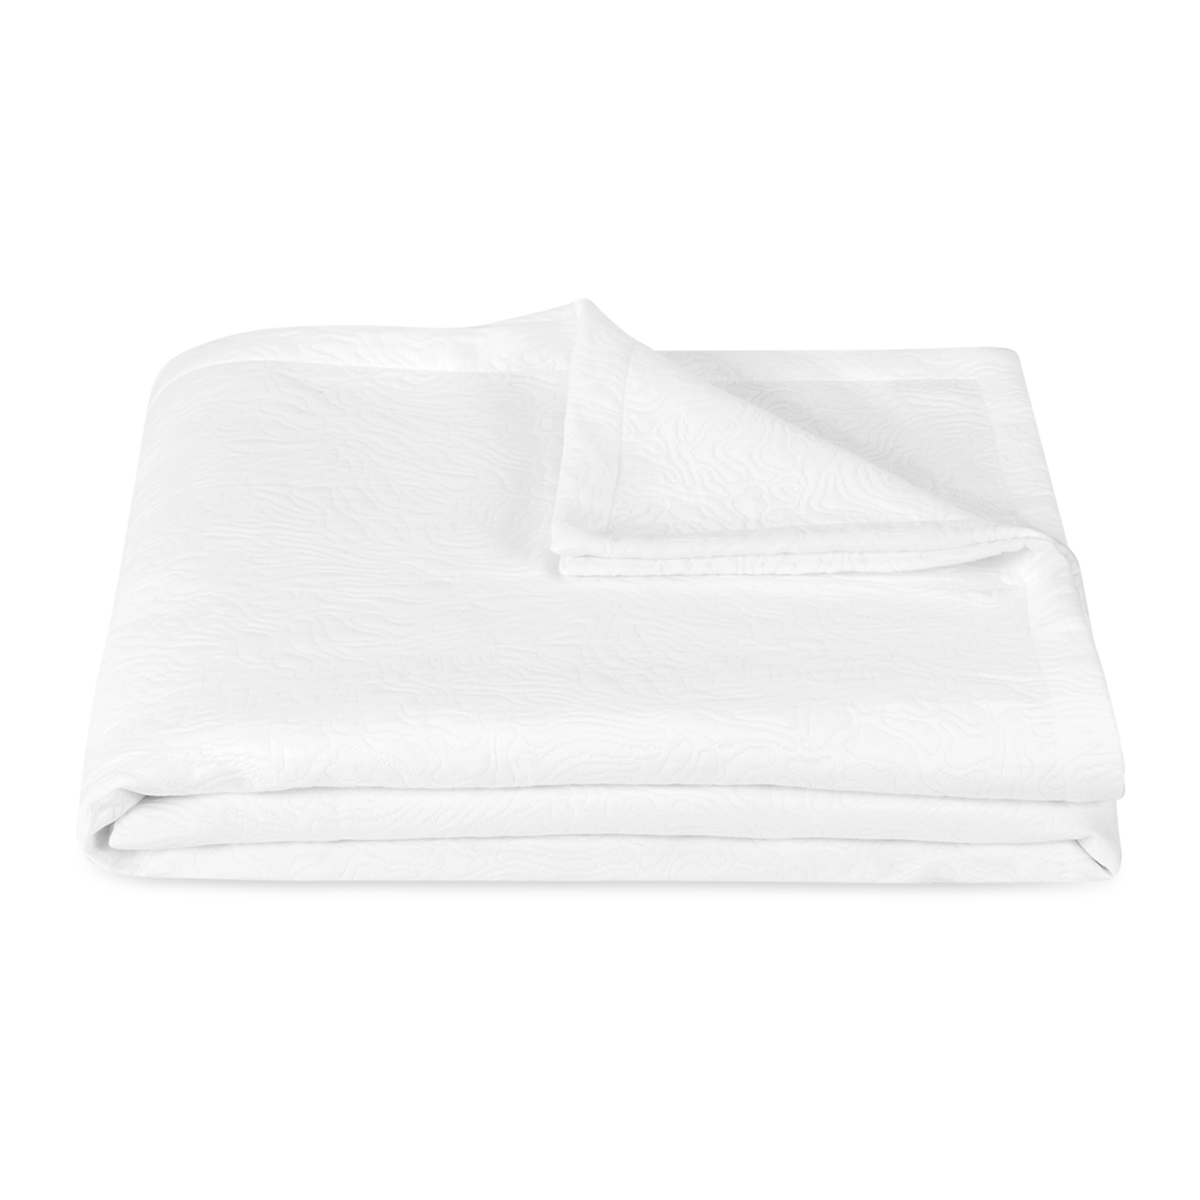 Folded Duvet Cover of Matouk Schumacher Cora Bedding in White Color